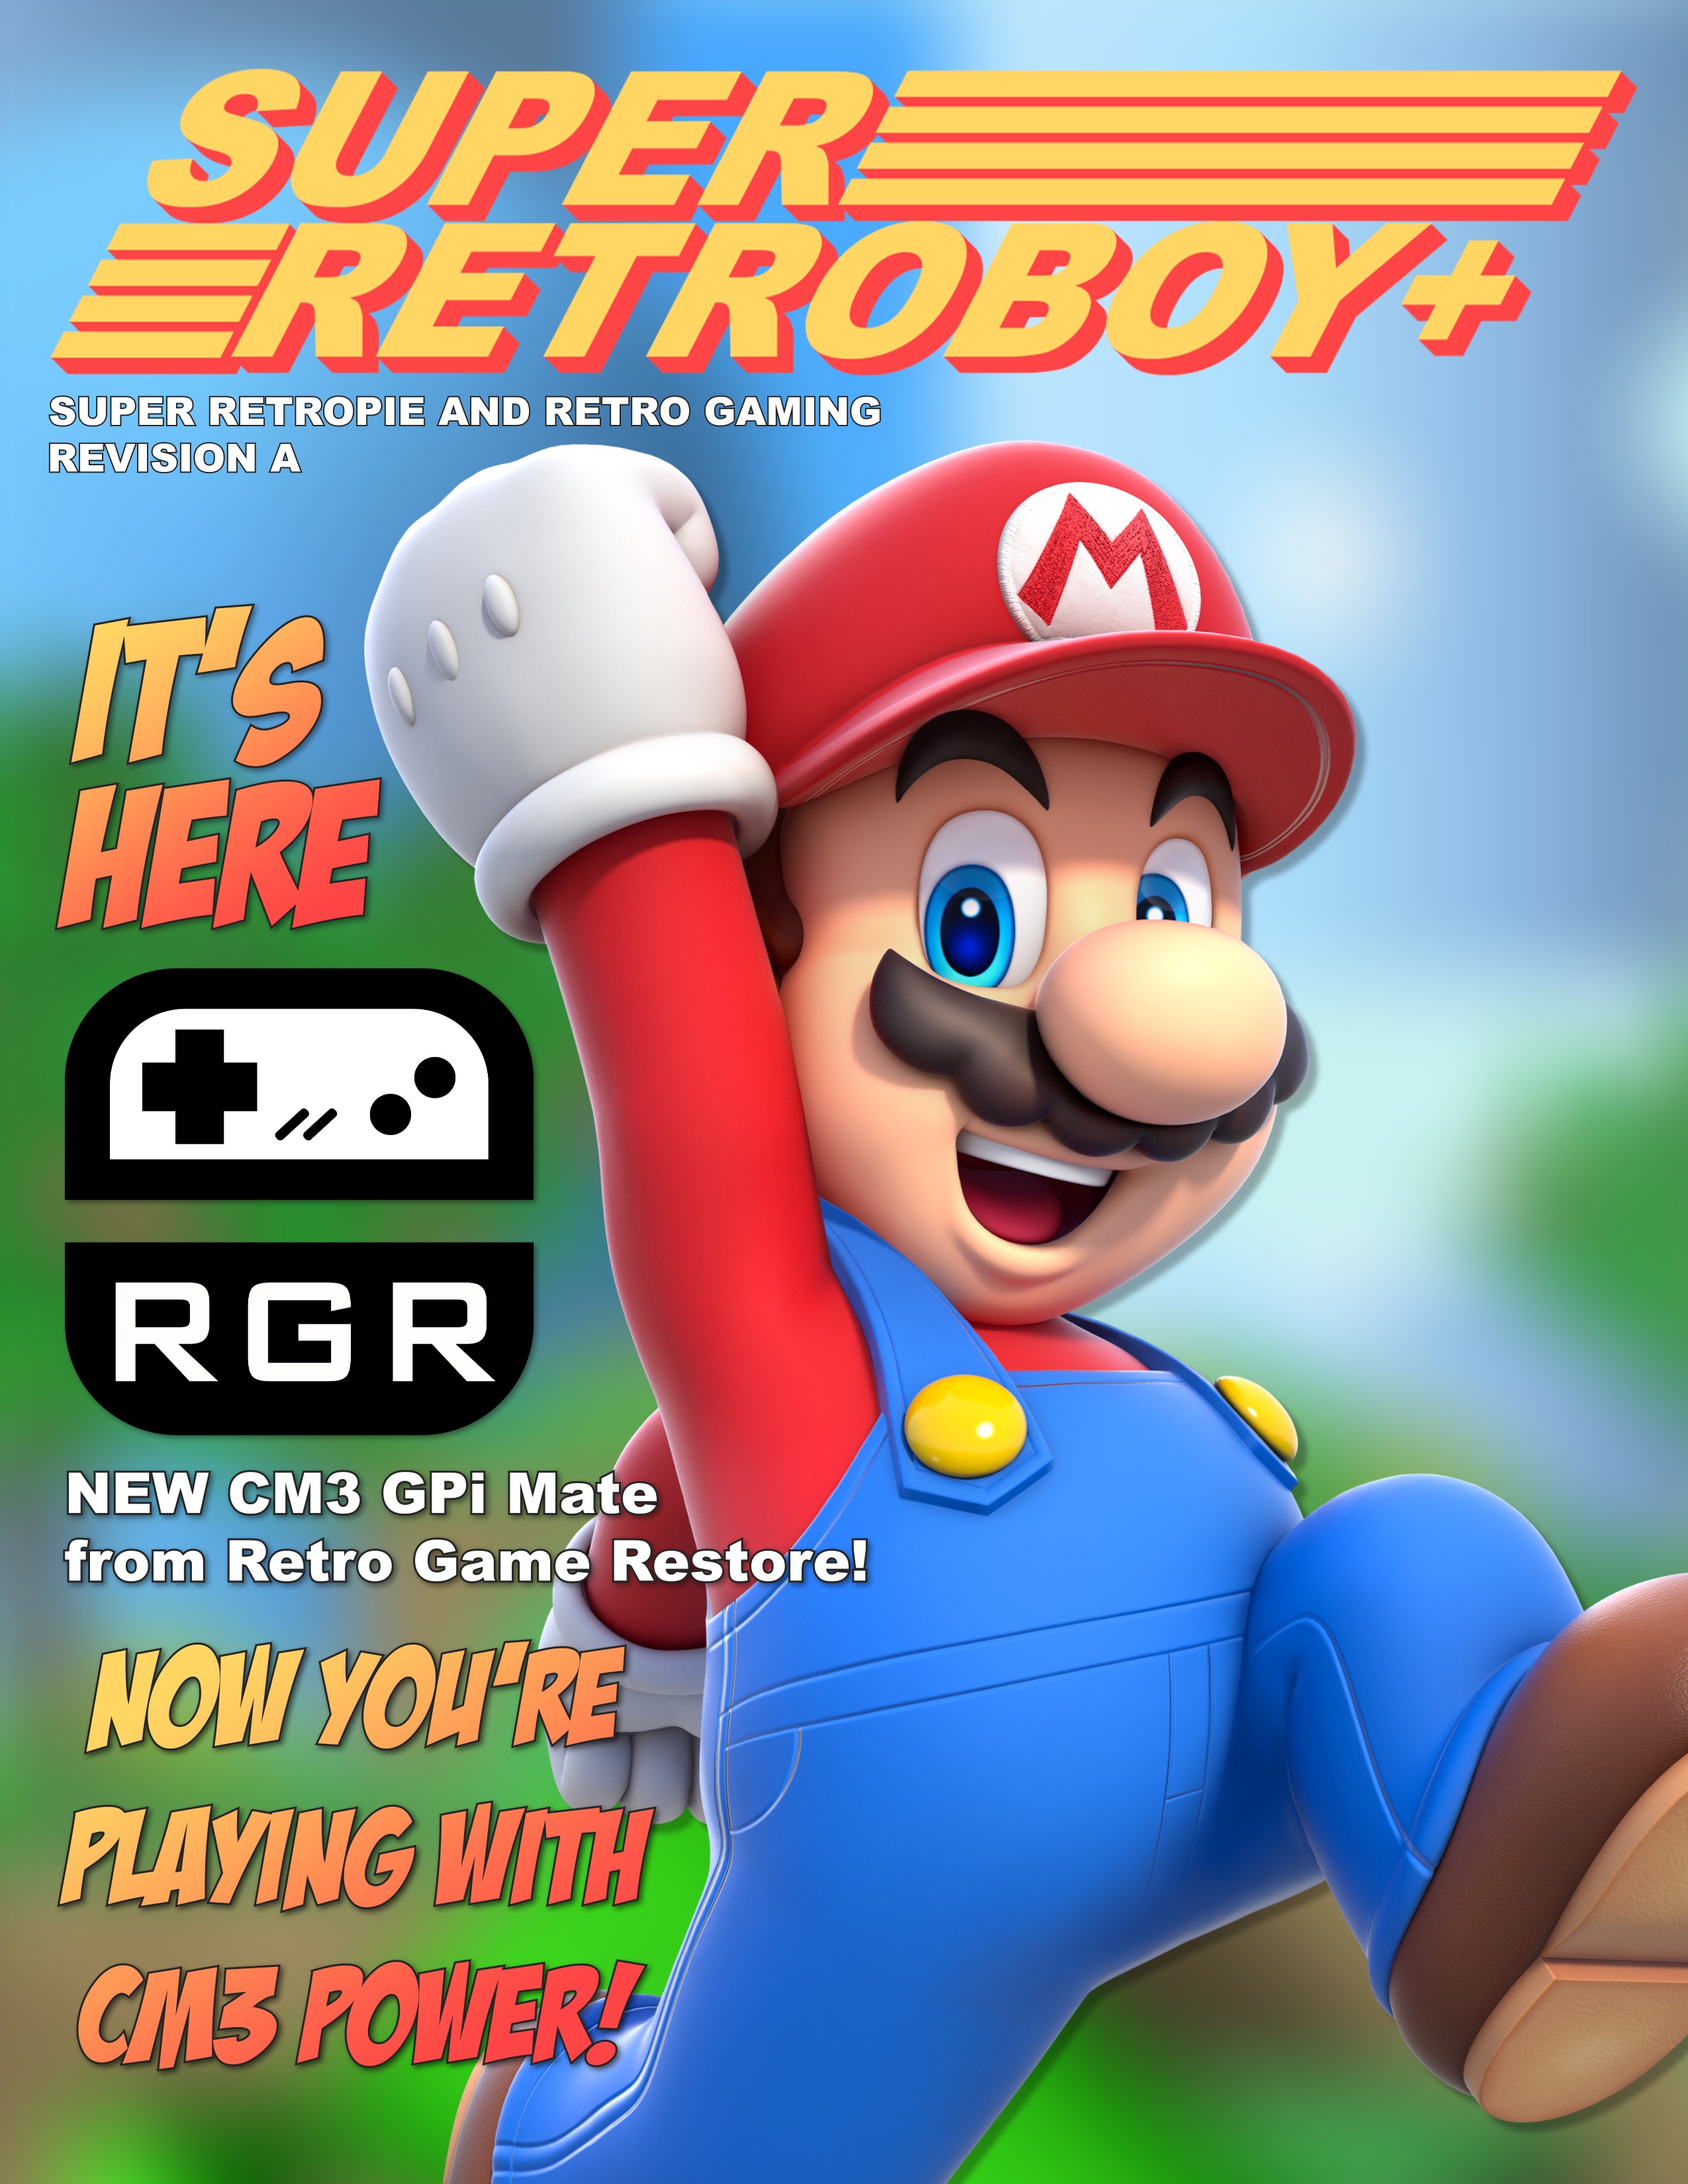 Super Retro City X on X: Super Retroboy Z2 Image is coming